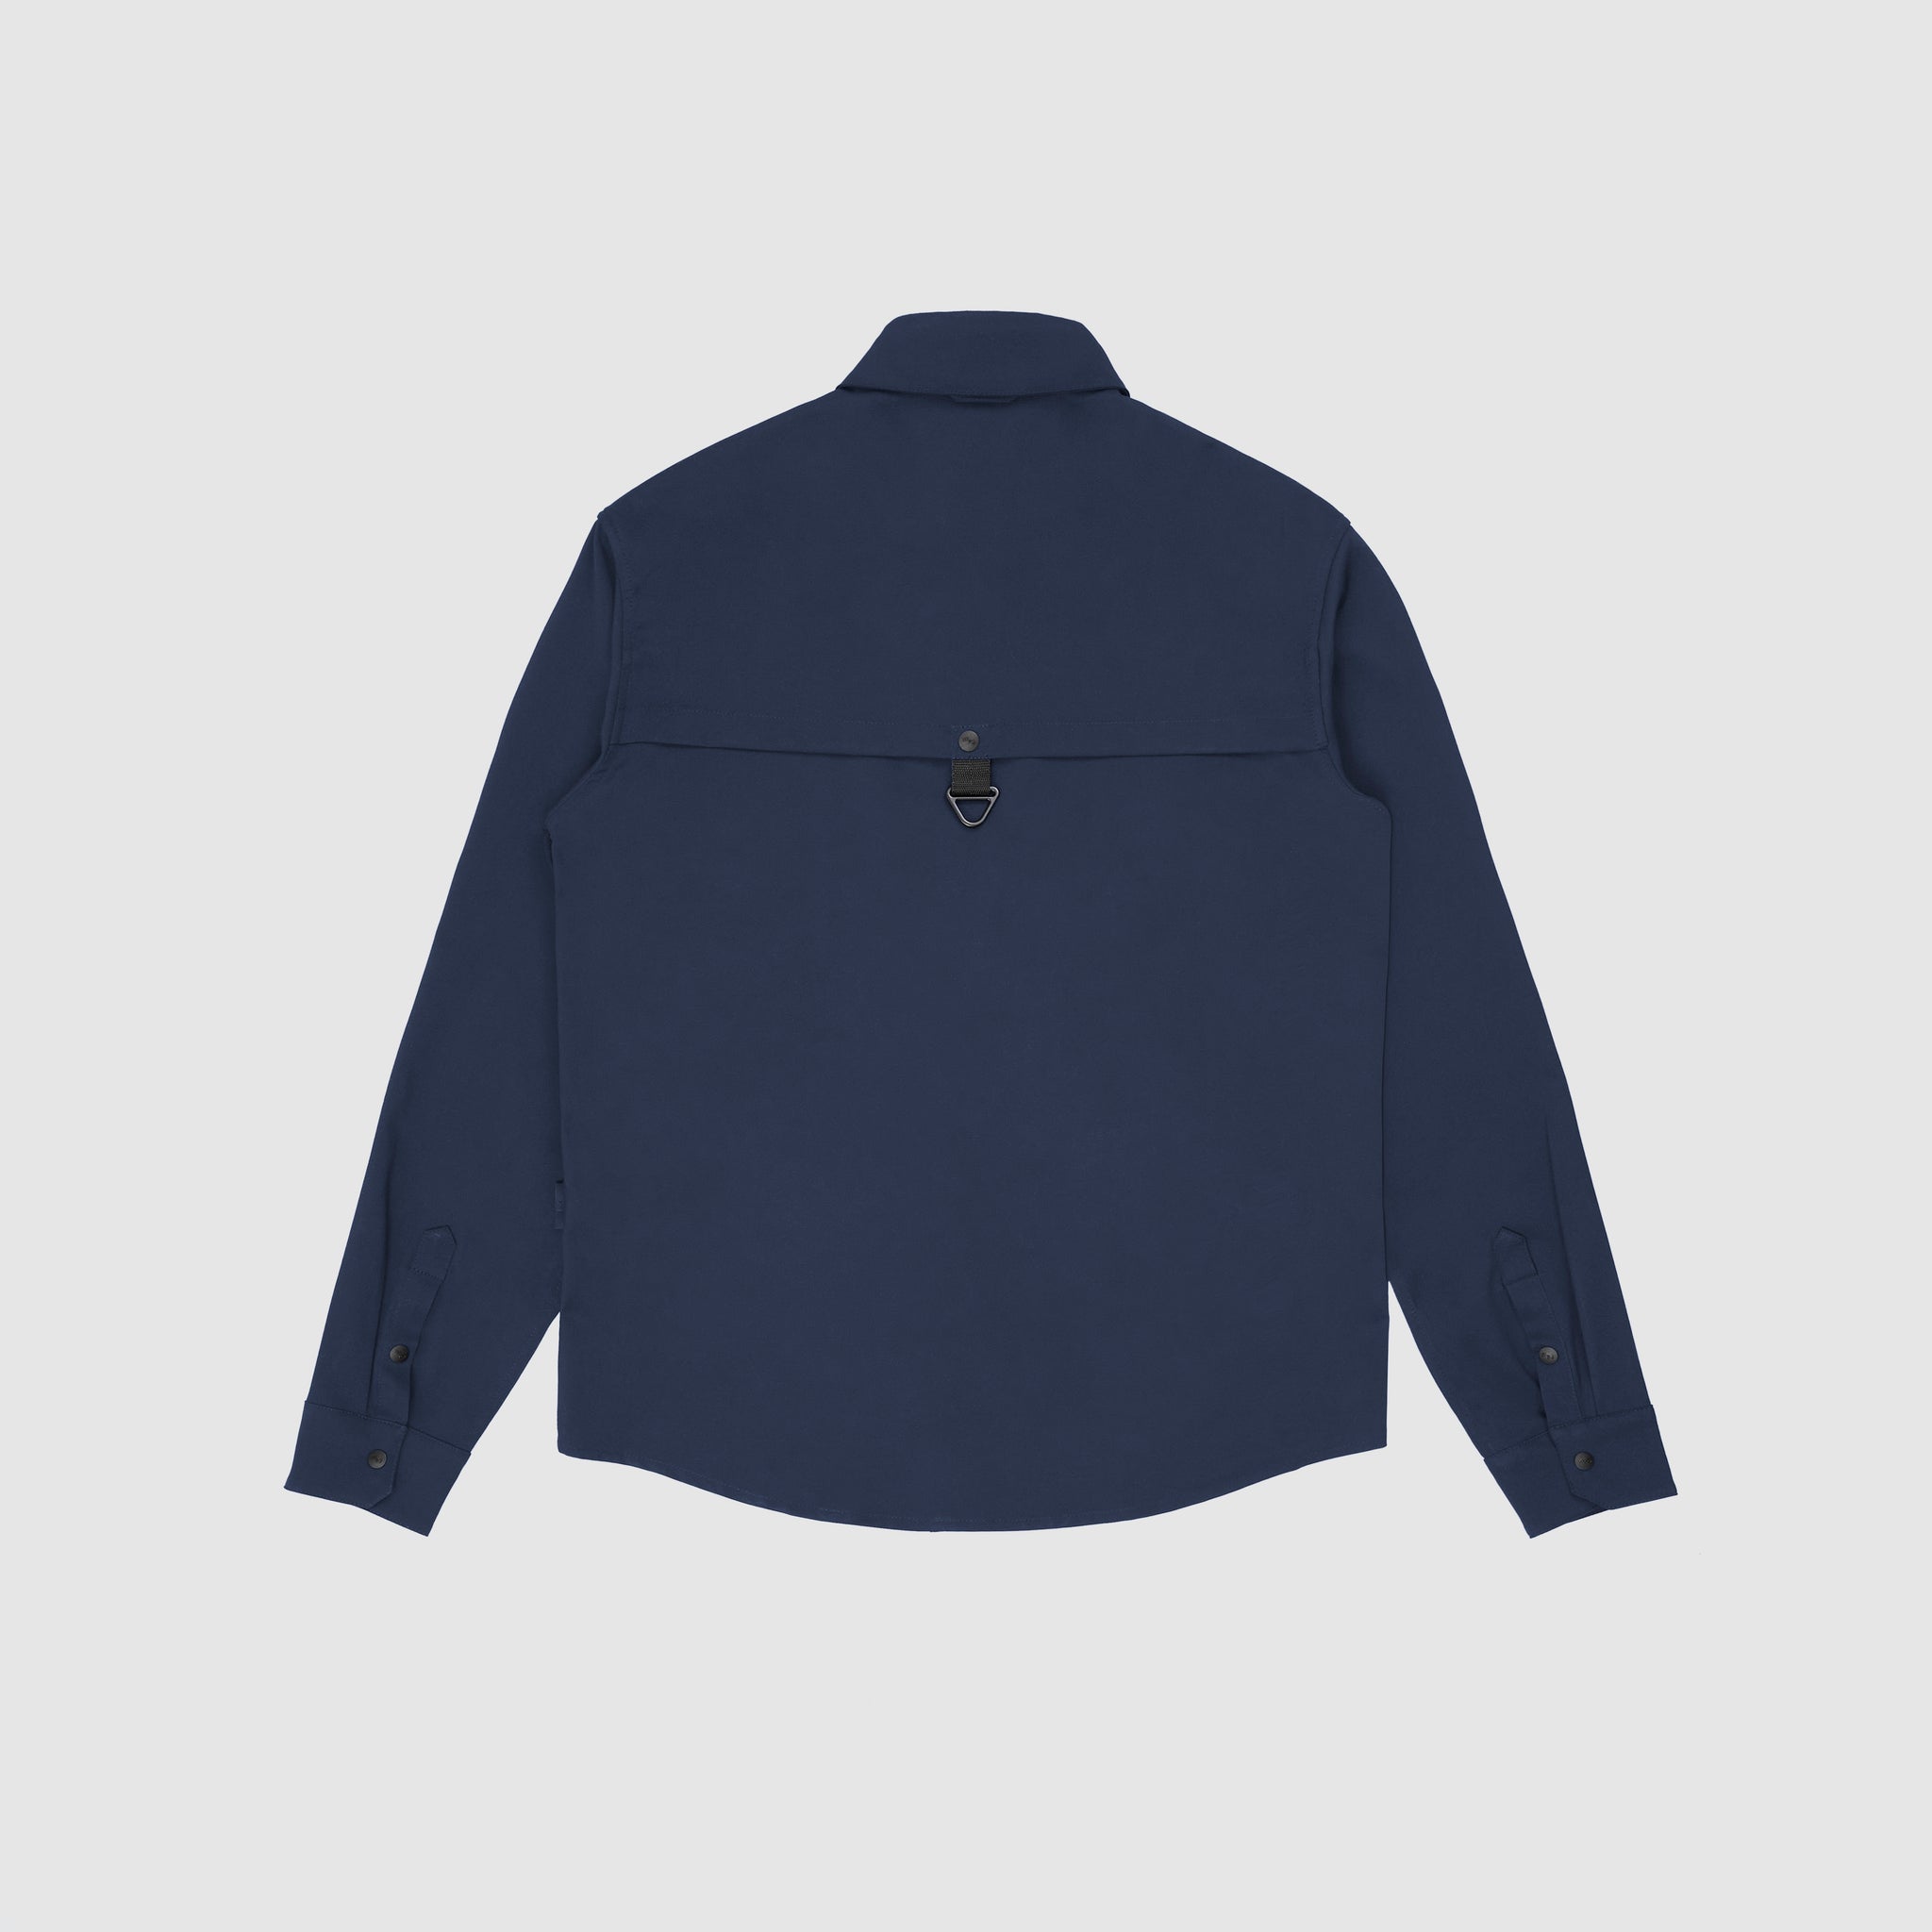 Hoffman Shirt- Blue [Flexi-Shield]